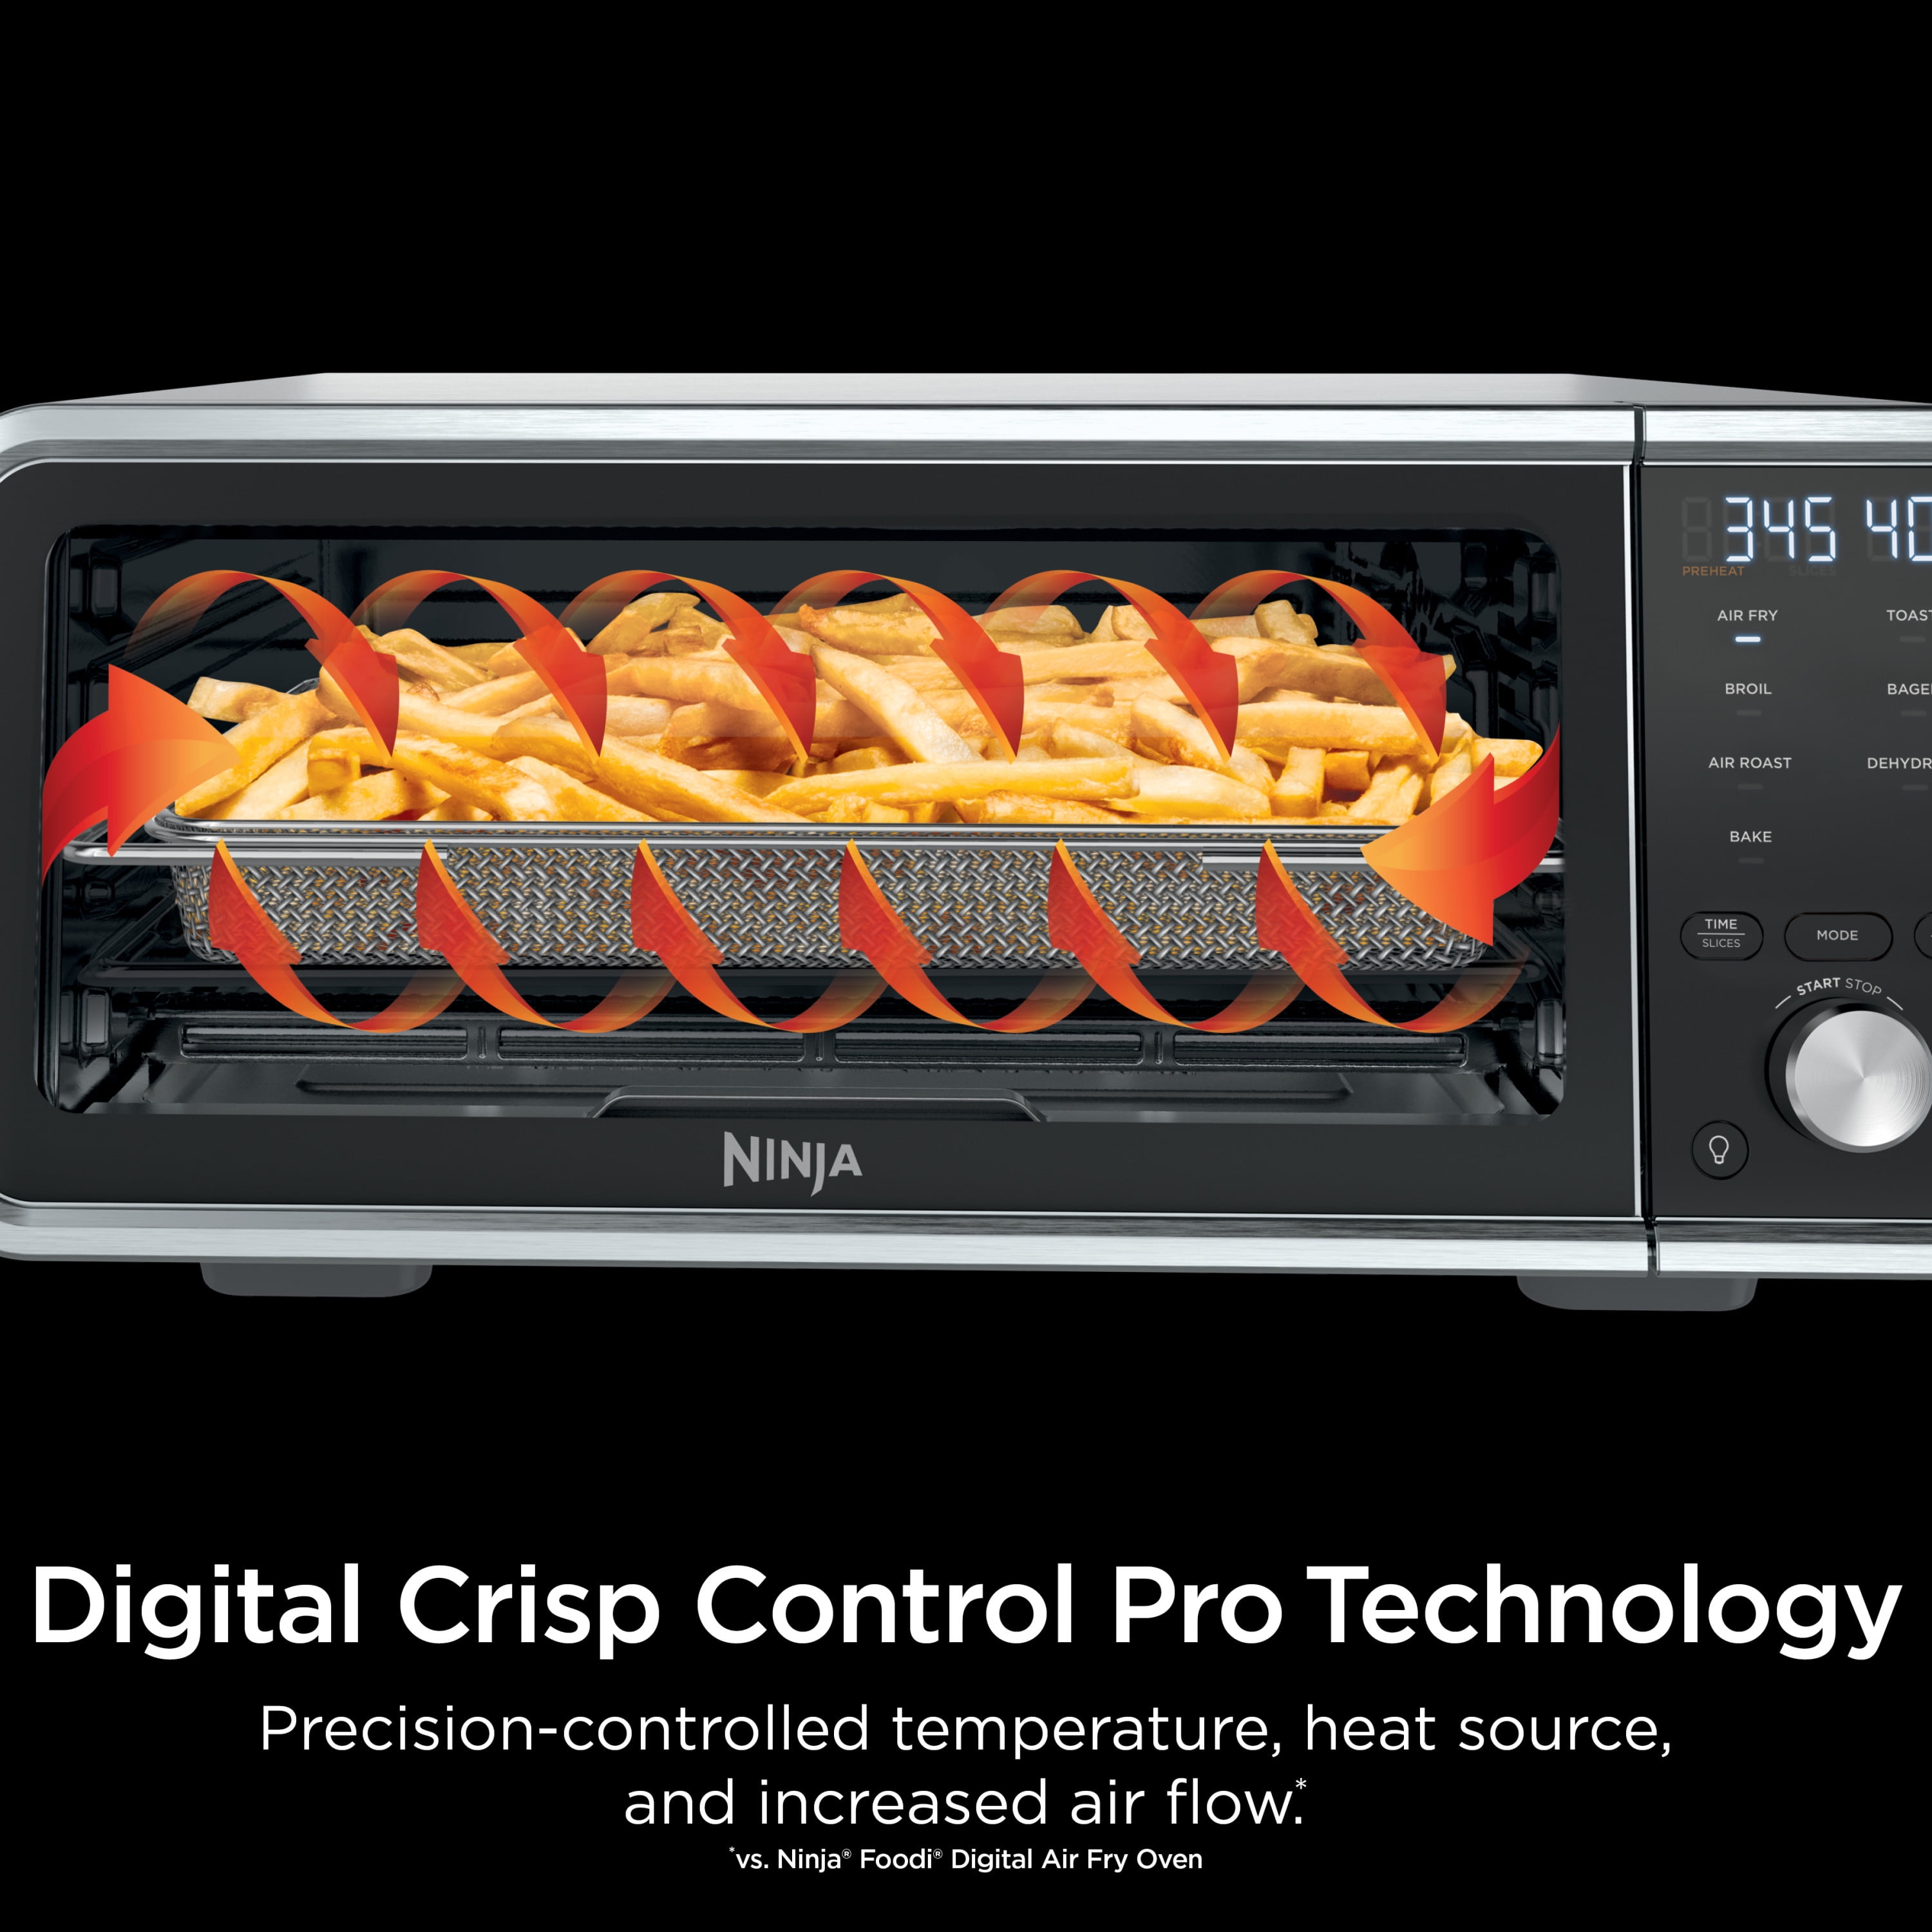 Ninja® Foodi® 7-in-1 Digital Pro Air Fry Oven, Countertop Oven, Dehydrate,  1800 Watts, SP200, New 